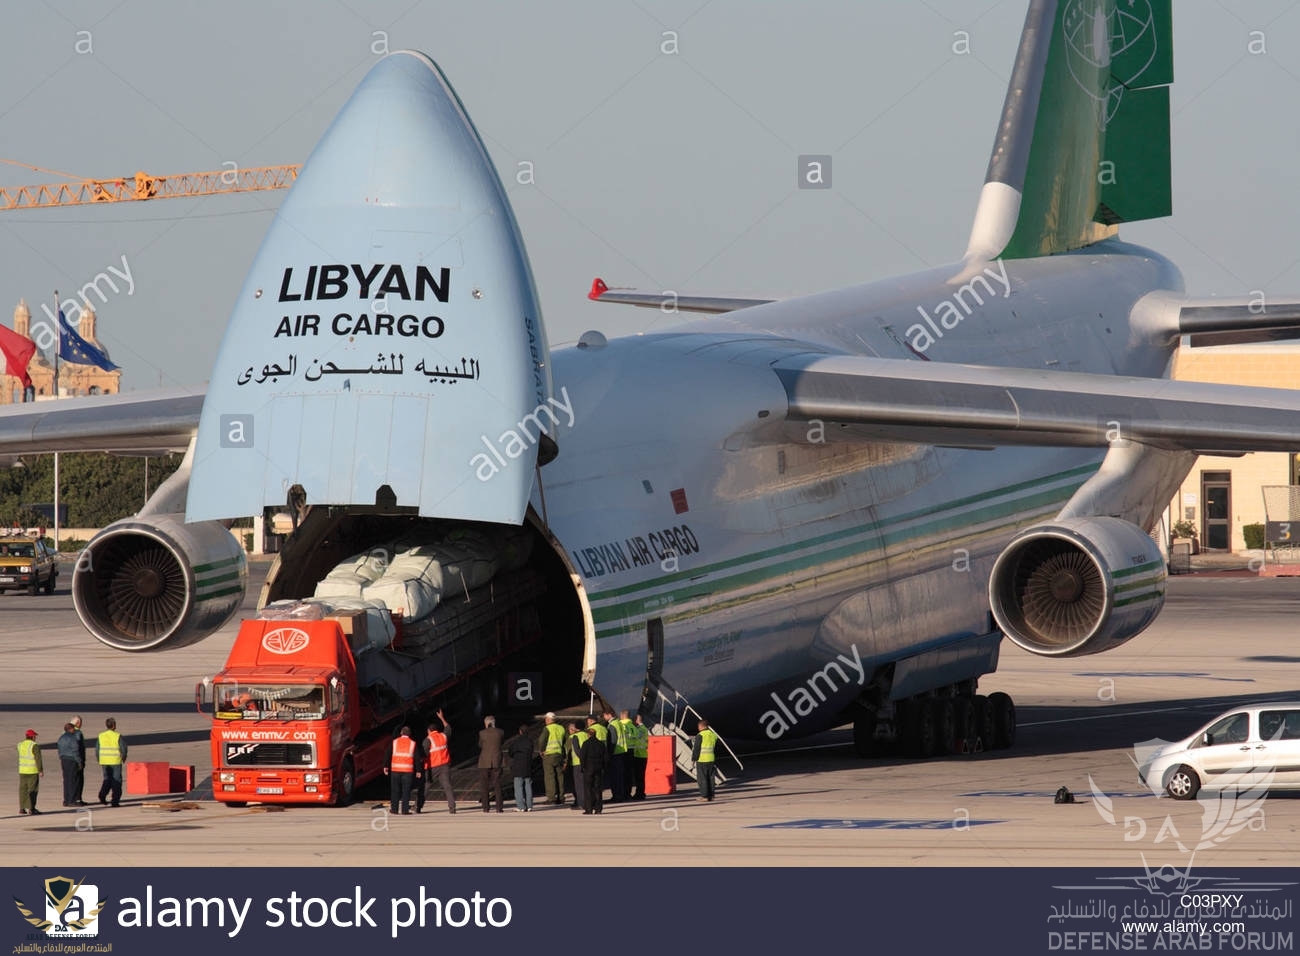 loading-cargo-on-board-a-libyan-air-cargo-antonov-an-124-by-reversing-C03PXY-1.jpg